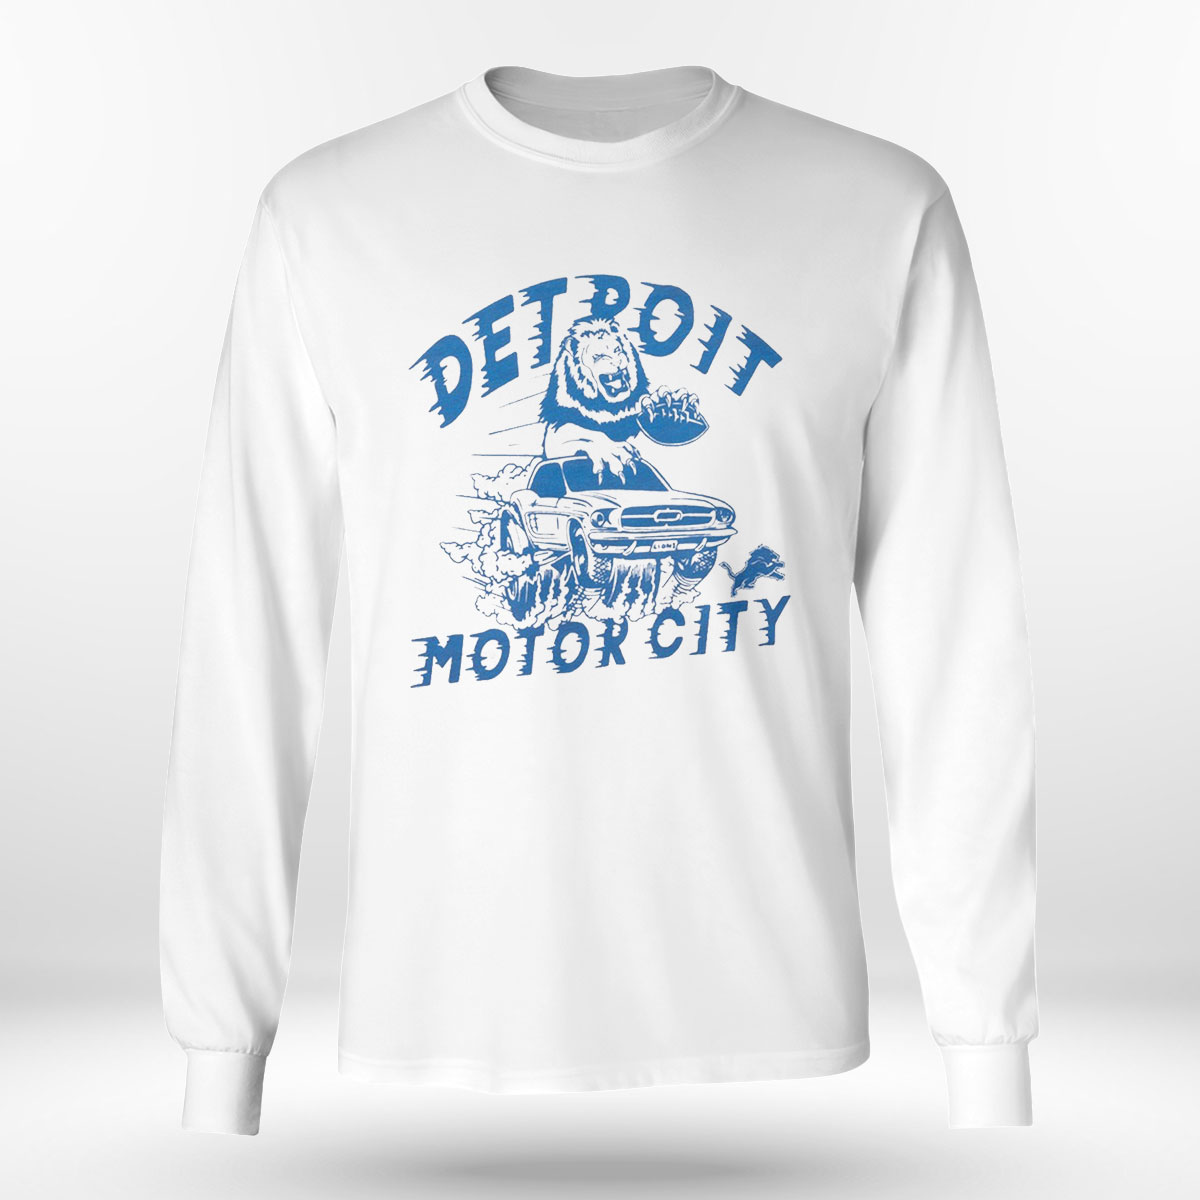 The Spirit Only In Detroit long sleeved shirt